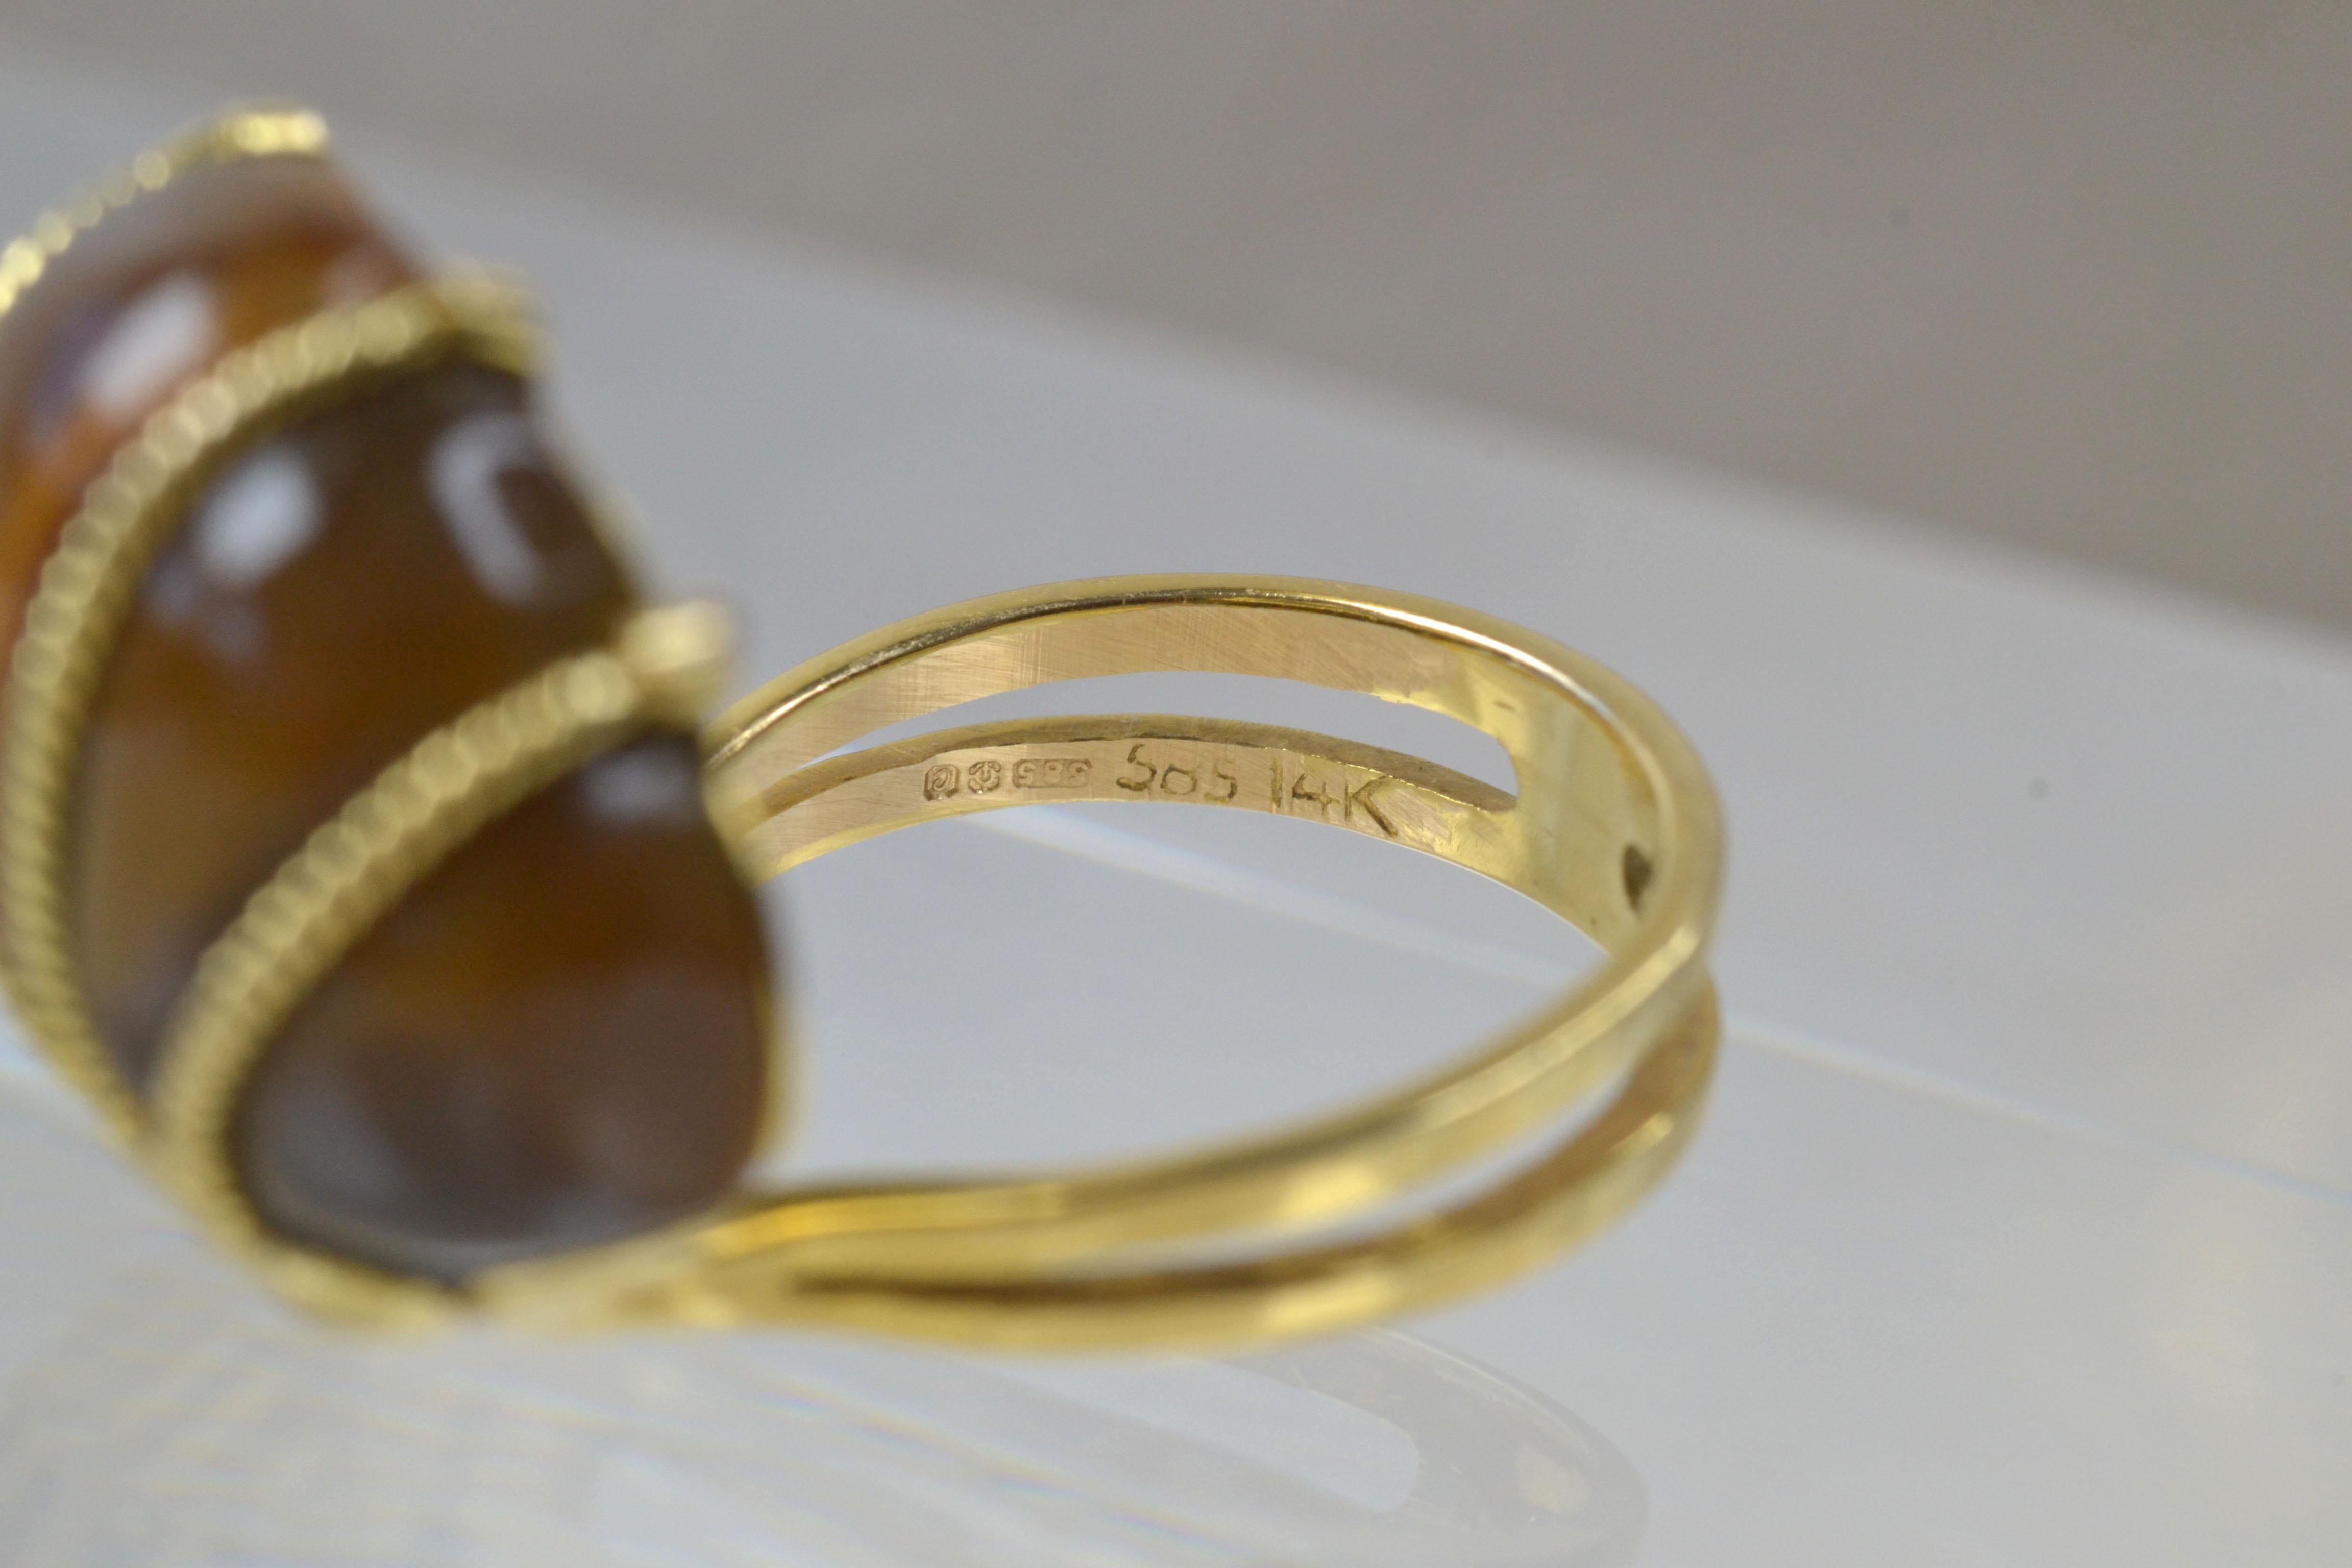 Revival Vintage 14k Gold Tiger's Eye Ring One-of-a-kind For Sale